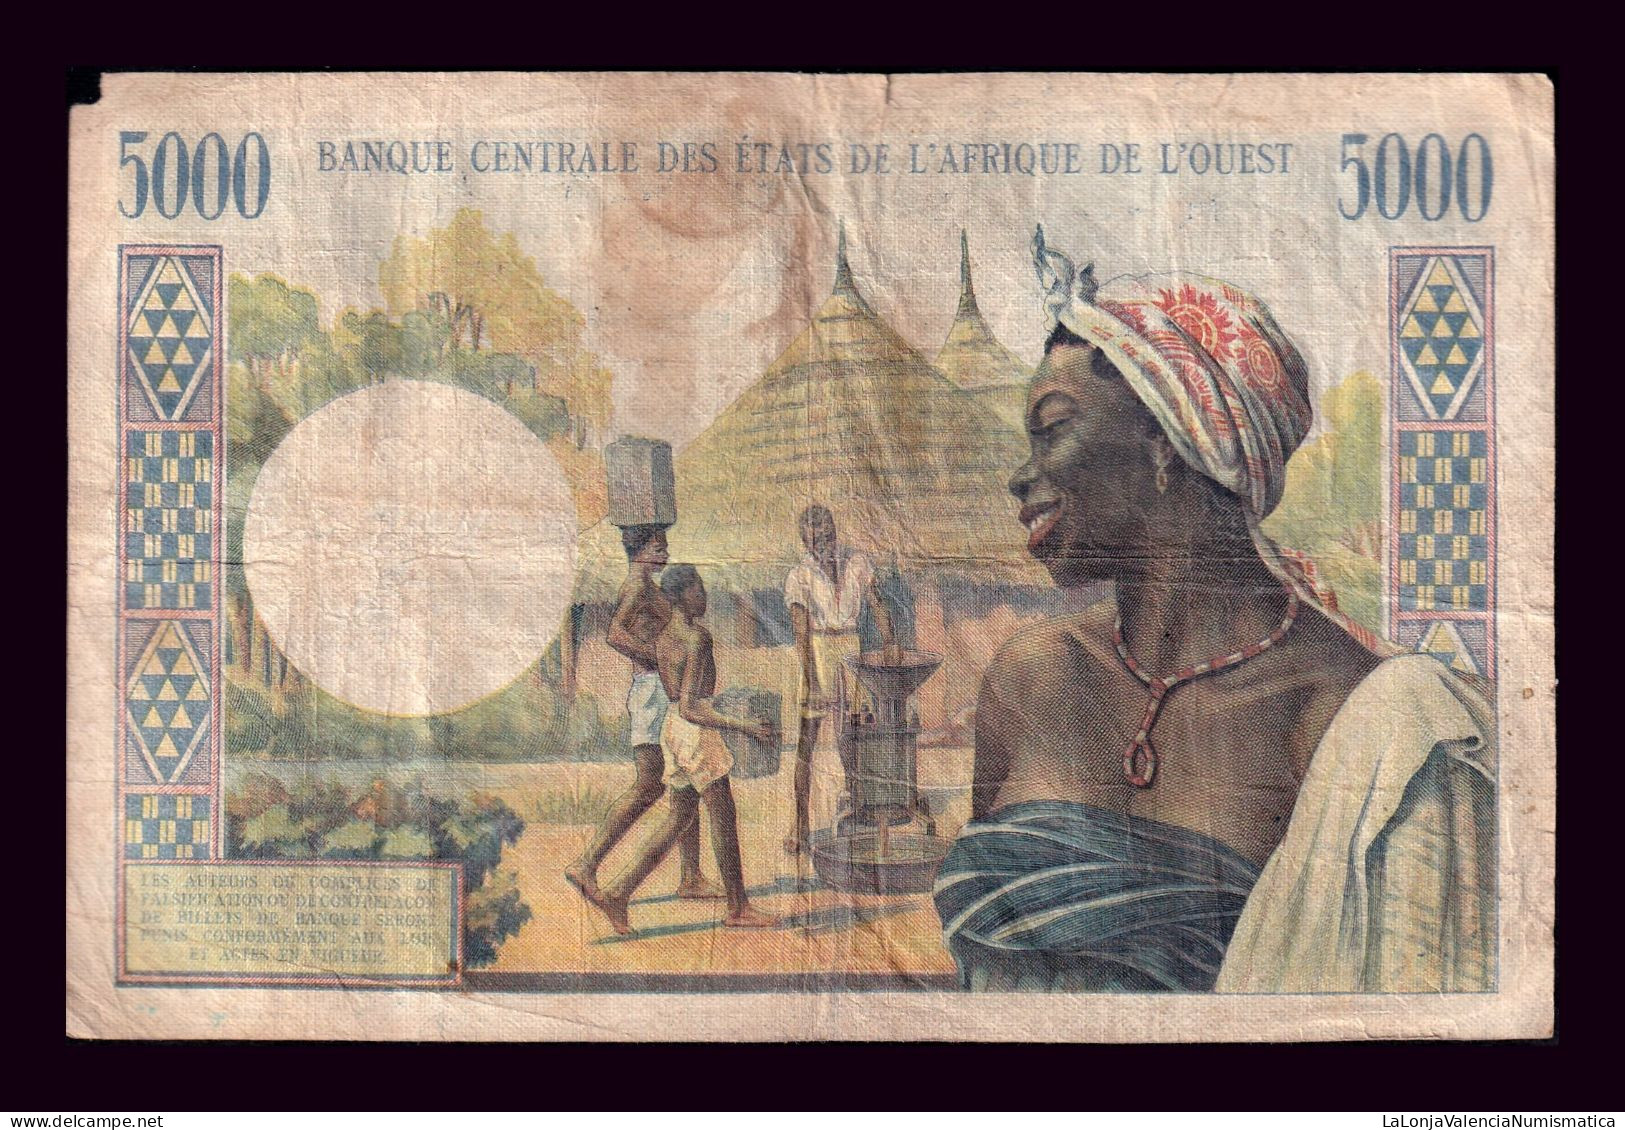 Estados De África Occidental Senegal West African States Senegal 5000 Francos ND (1965) Pick 704Km Bc F - Senegal